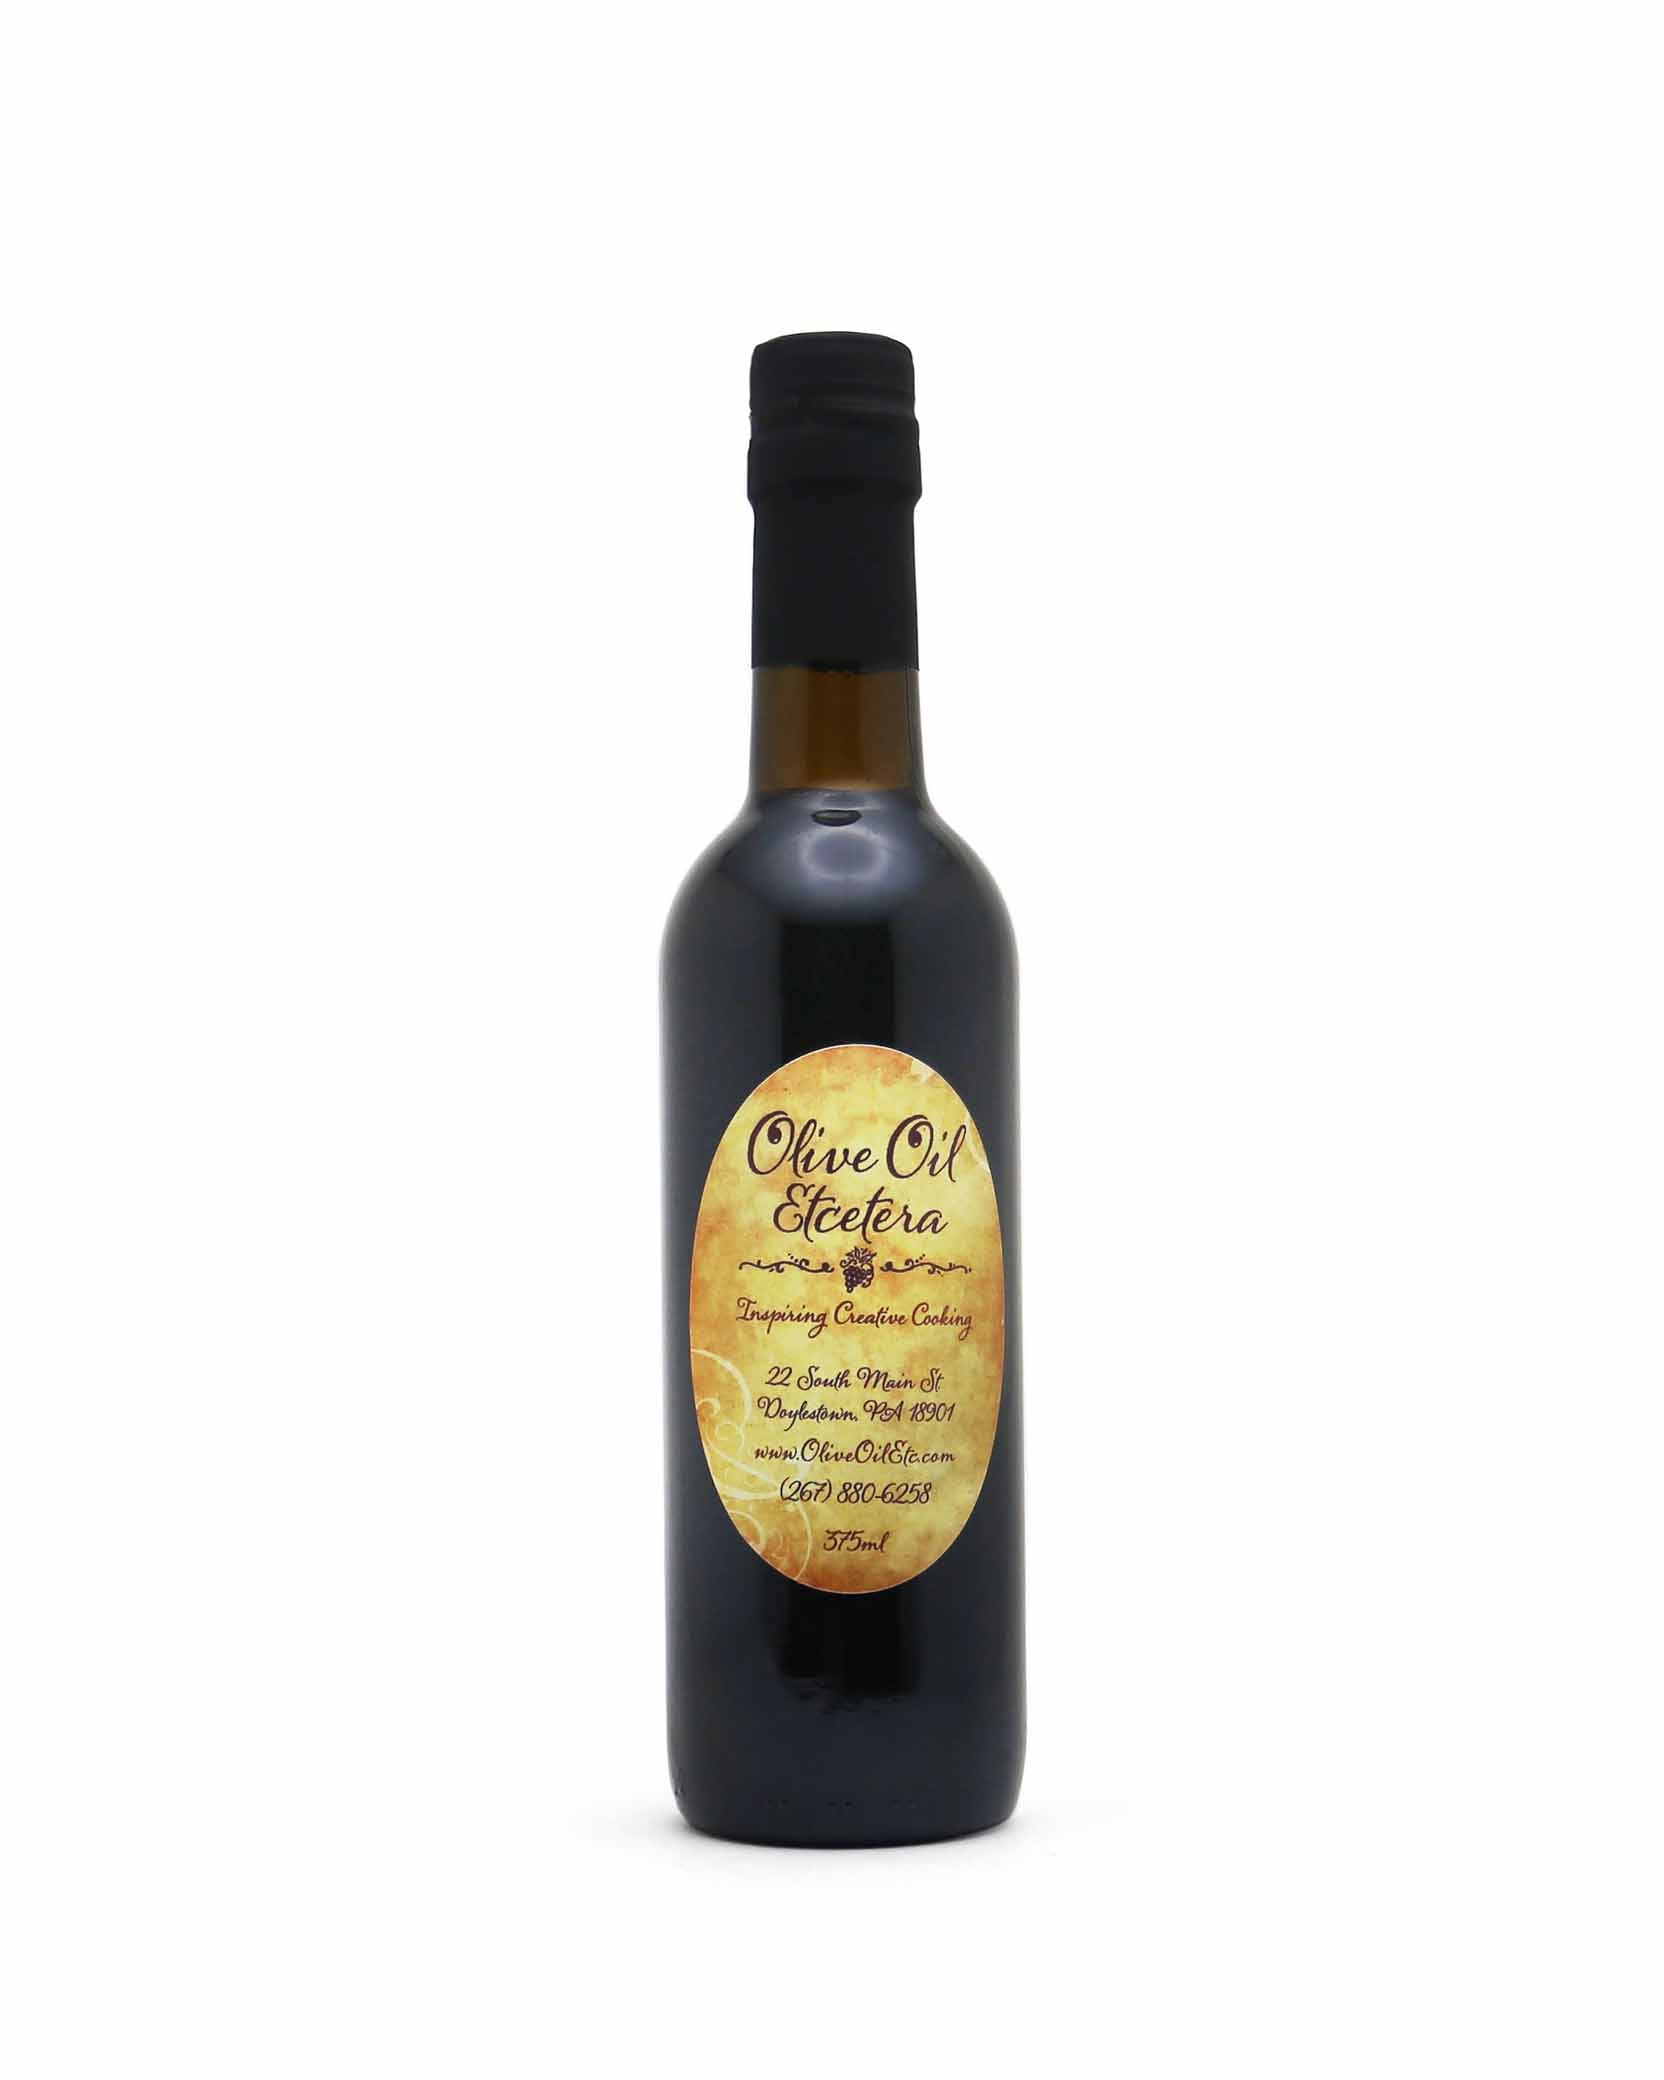 Oregano Olive Oil in a 375 ml bottle from Olive Oil Etcetera in Doylestown PA 